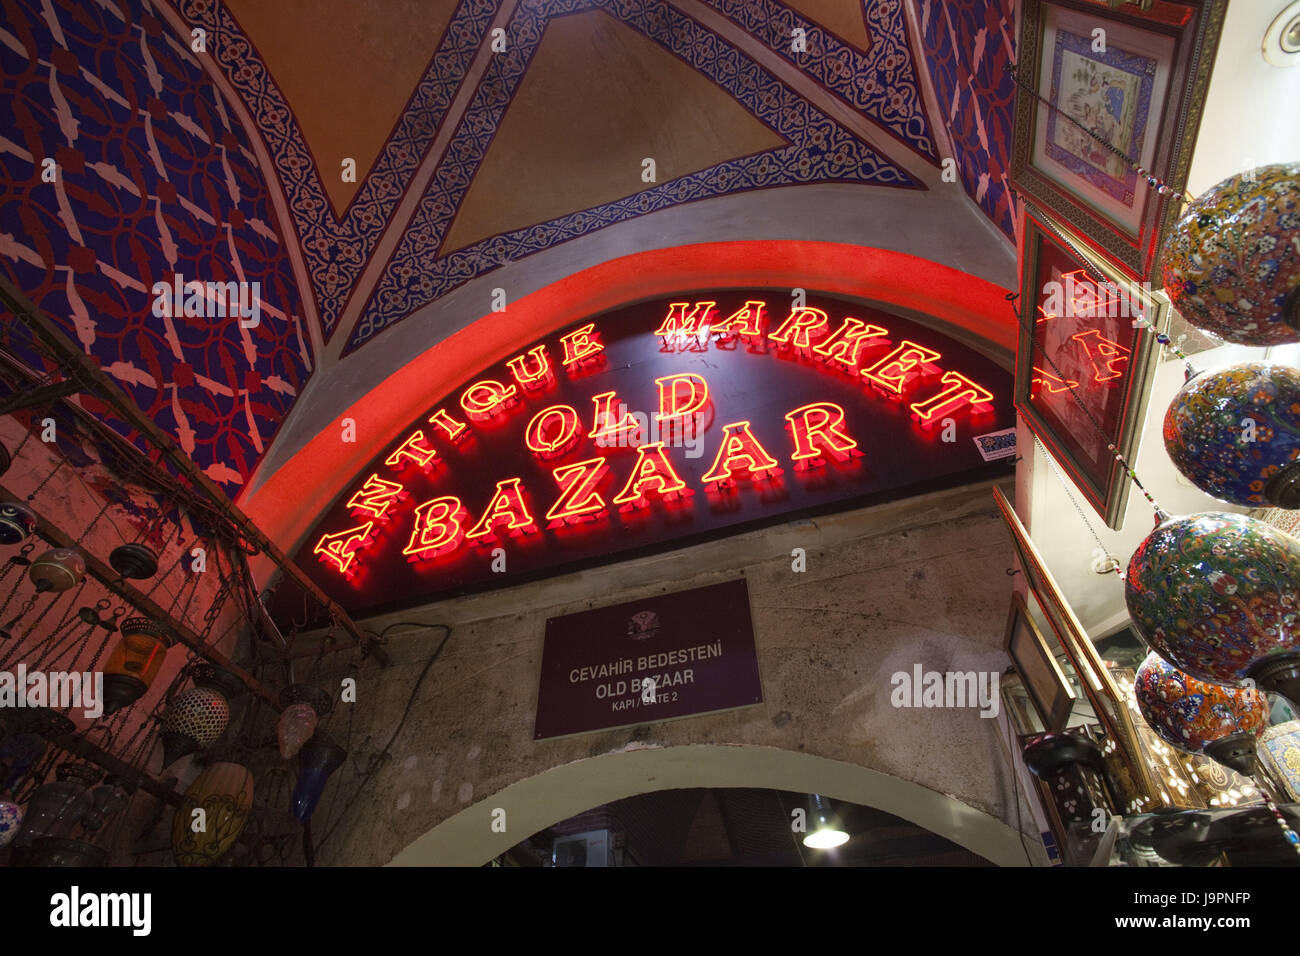 Turkey,Istanbul,Sultanahmet,big bazaar,input to the classical art market, Stock Photo